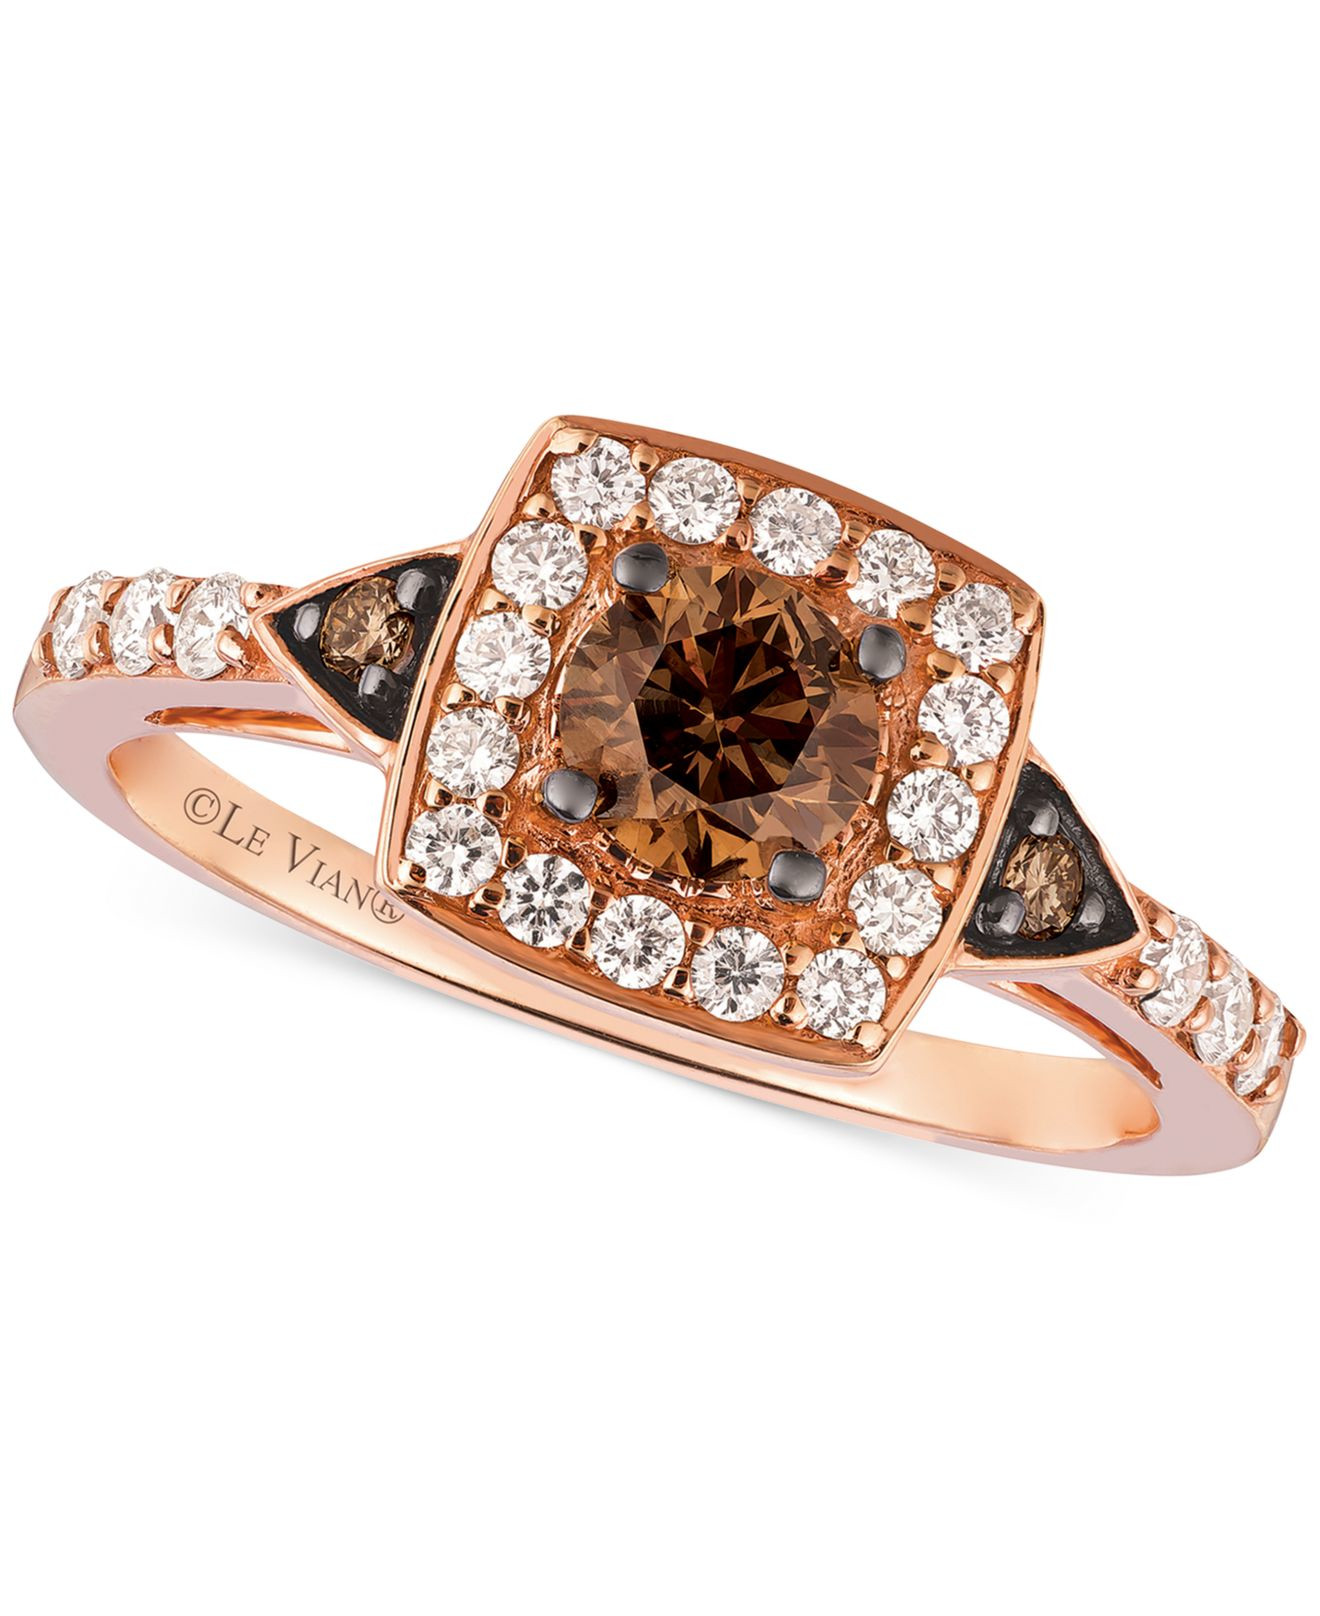 Chocolate Diamond Rings For Women
 Lyst Le Vian Chocolate Diamond And White Diamond Ring In